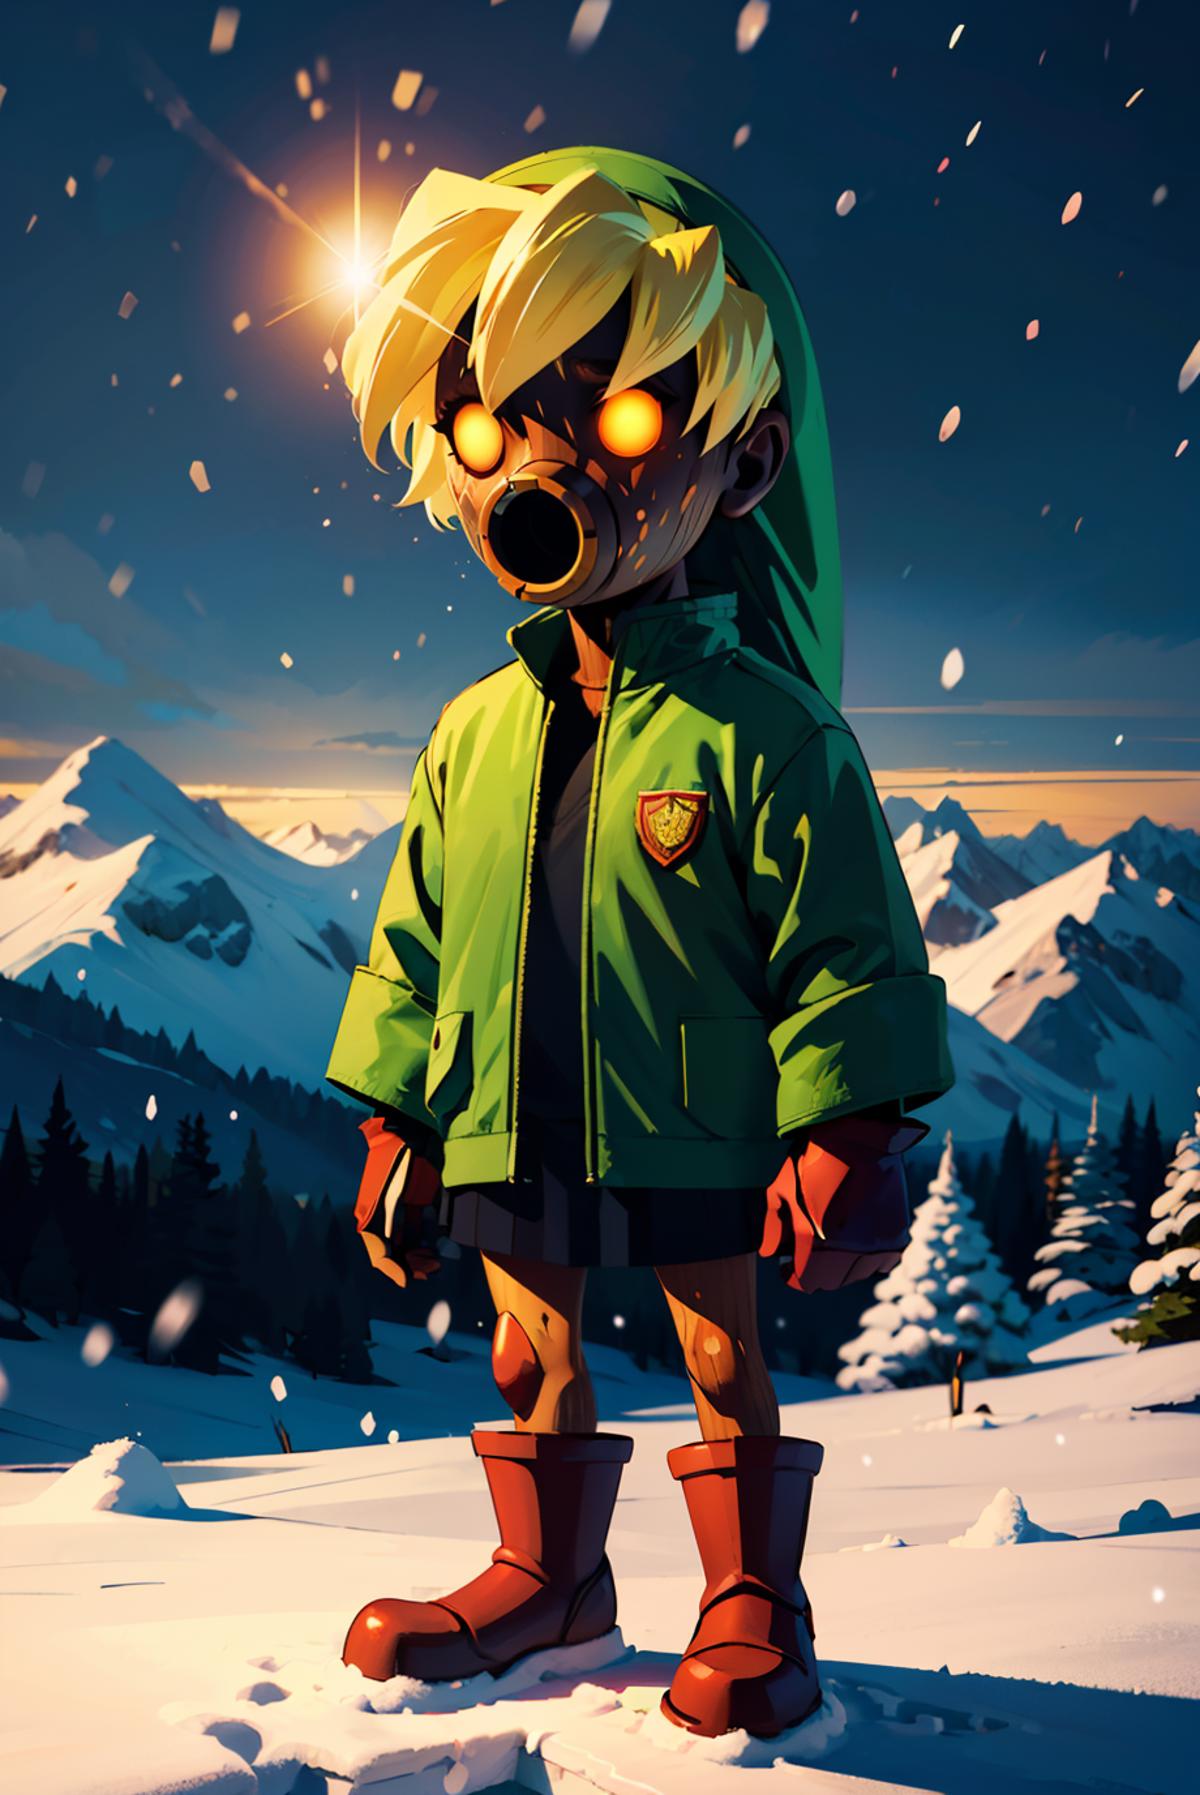 Deku Link (The Legend Of Zelda: Majora’s Mask) image by wikkitikki